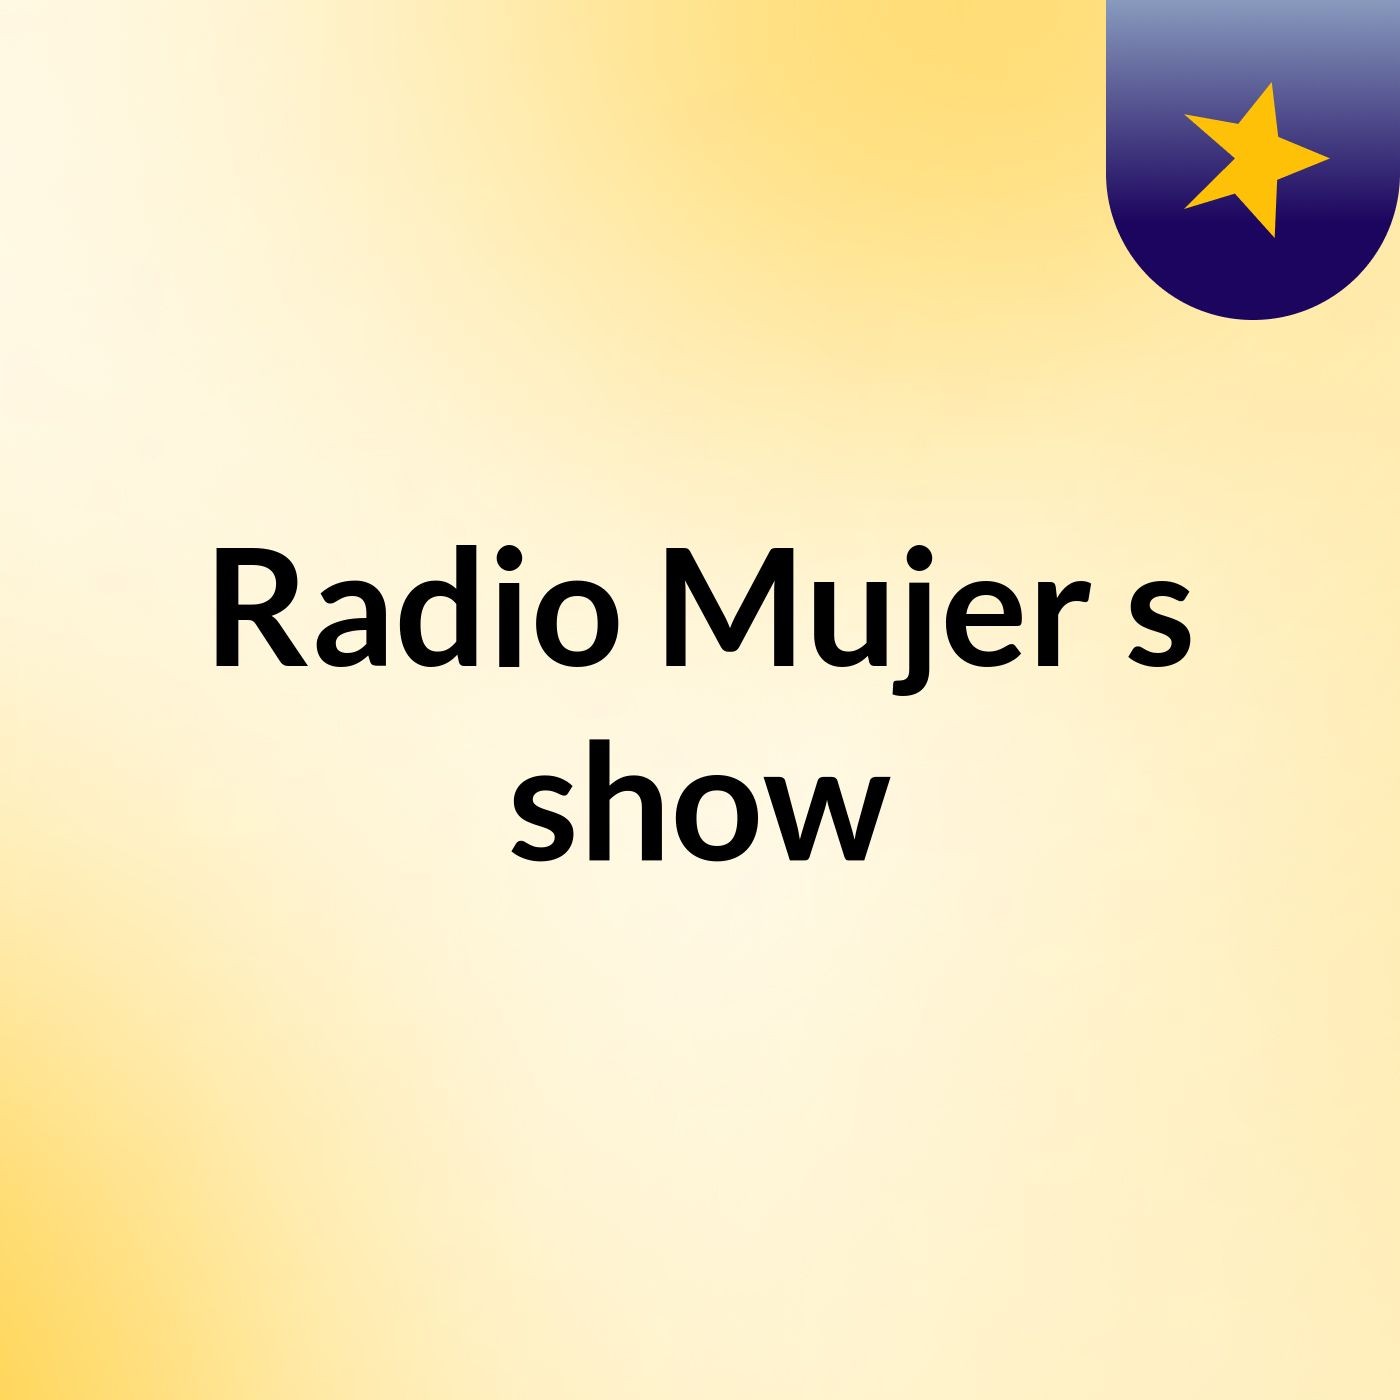 Radio Mujer's show